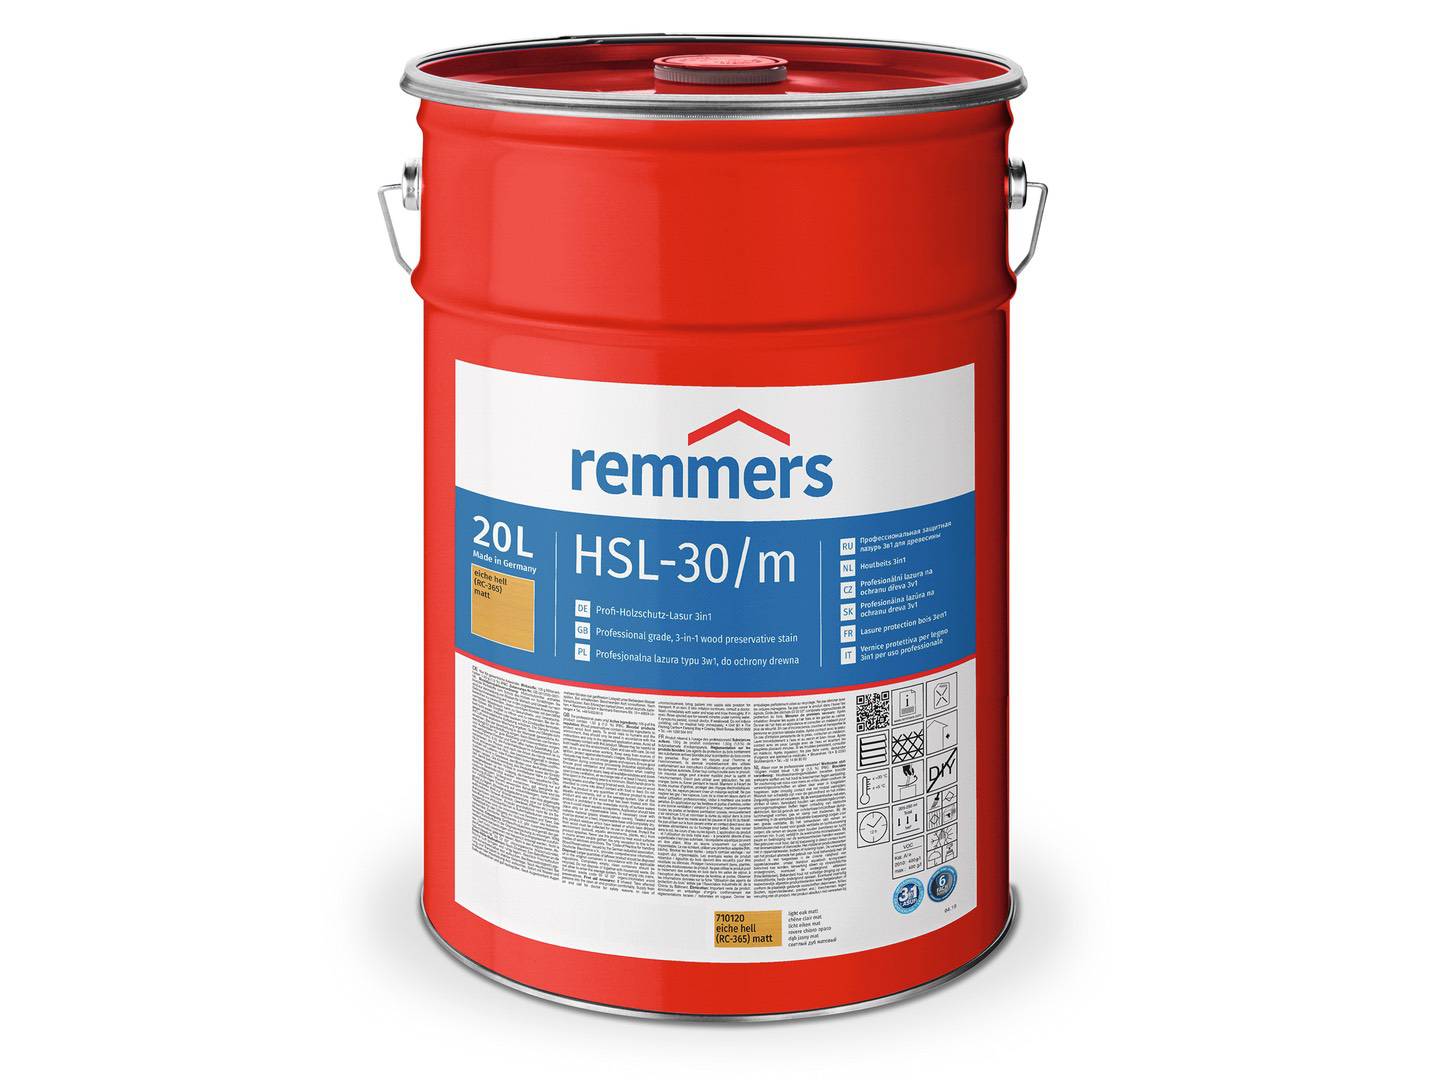 REMMERS HSL-30/m-Profi-Holzschutz-Lasur 3in1 pinie/lärche (RC-260) matt 20 l